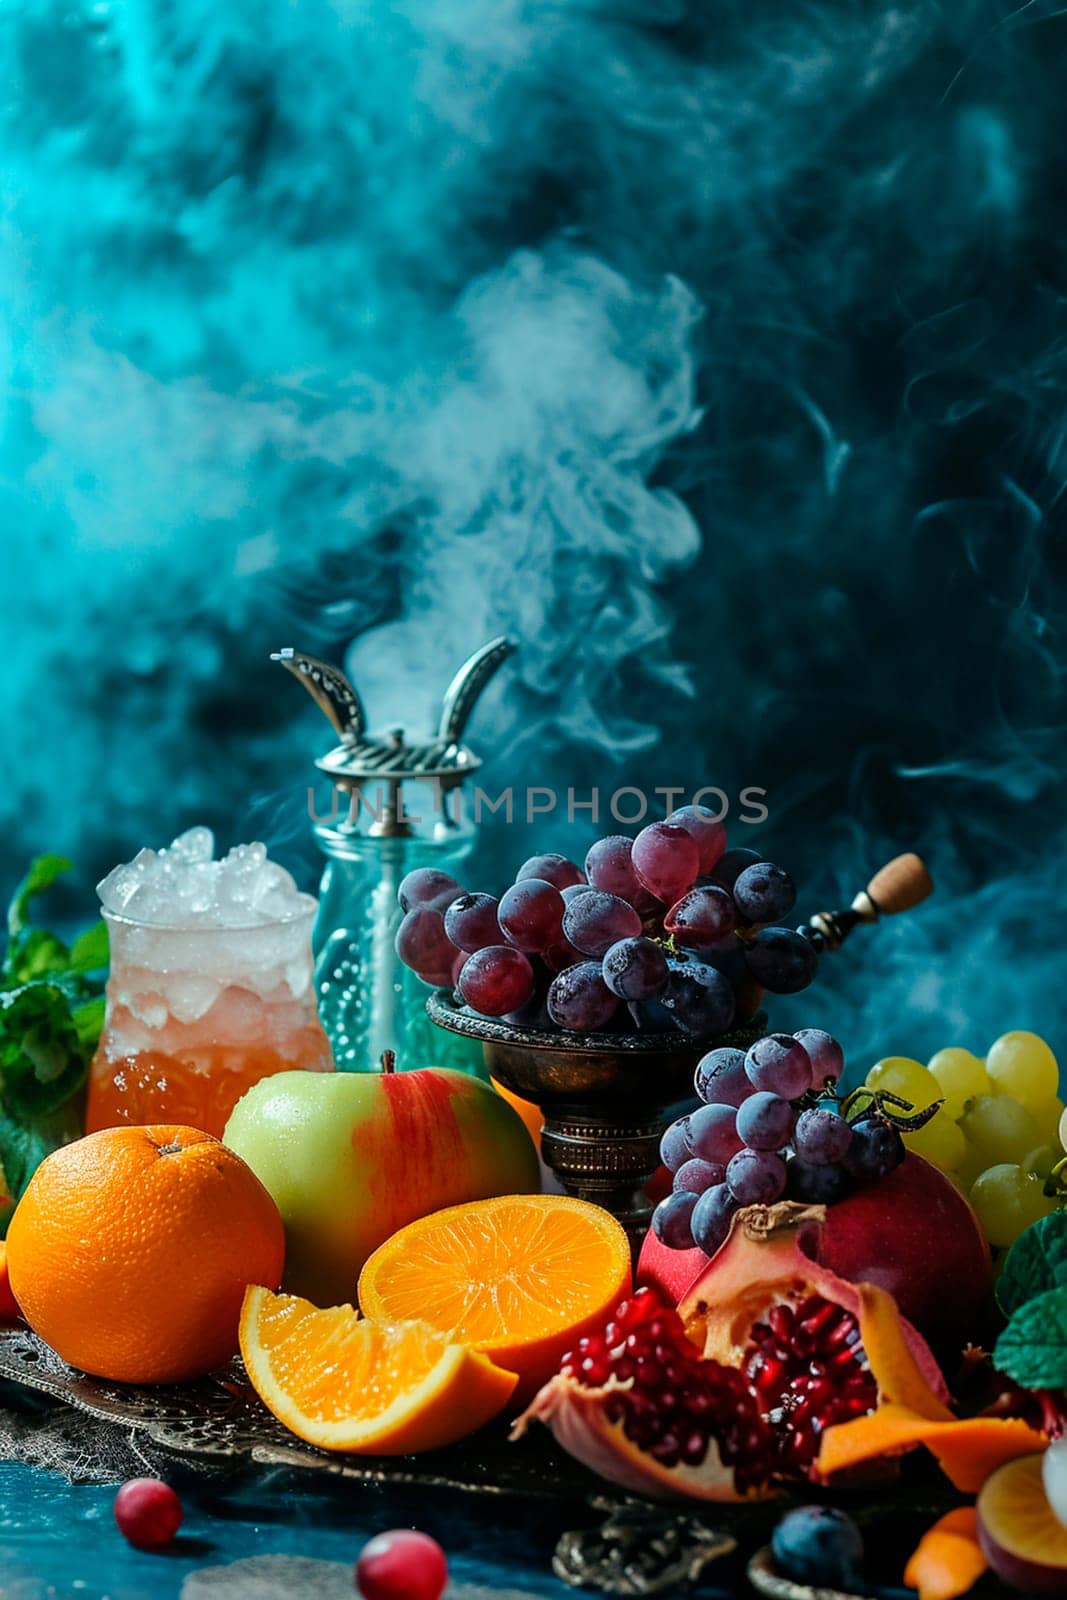 hookah in smoke with fruit. Selective focus. by yanadjana